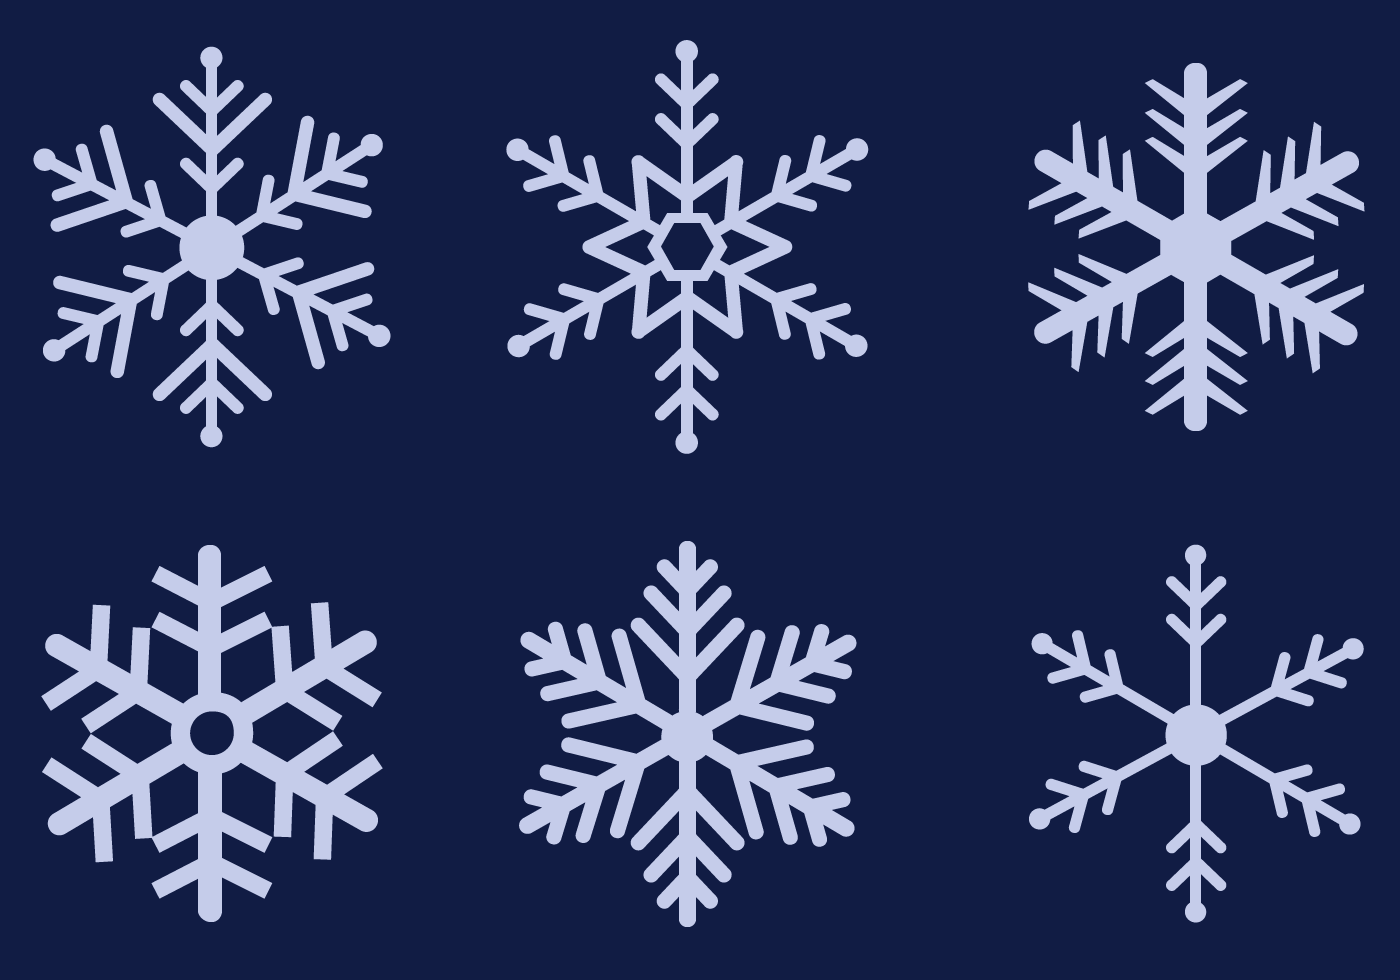 Download Snowflakes Vector - Download Free Vector Art, Stock ...